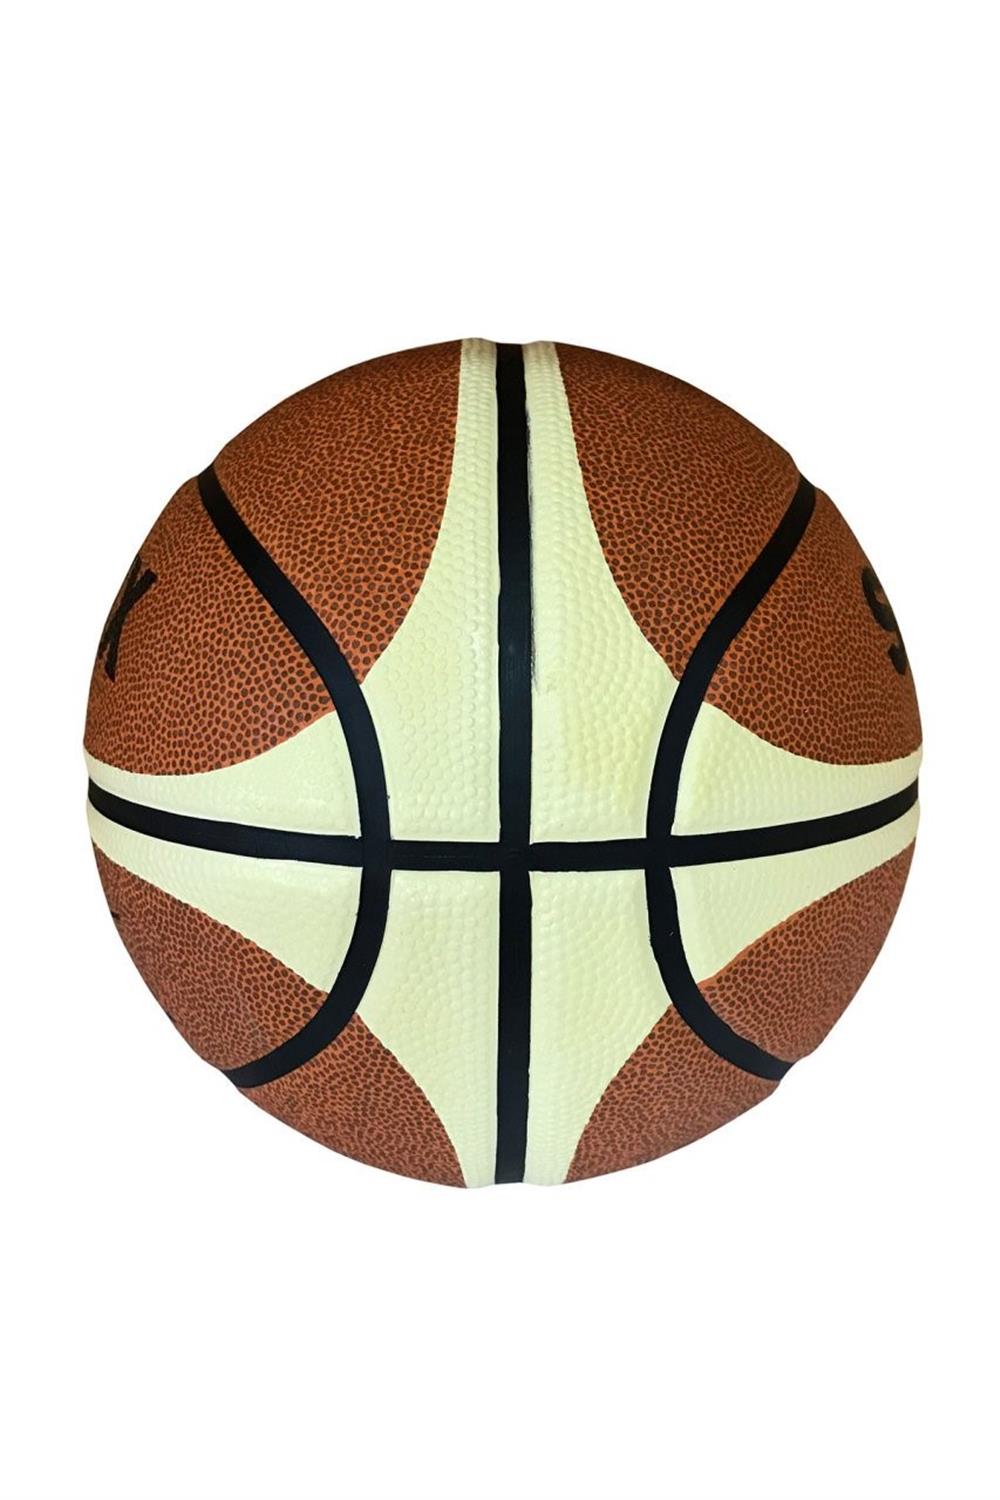 Selex SLX-700 Basketbol Topu 7 Numara